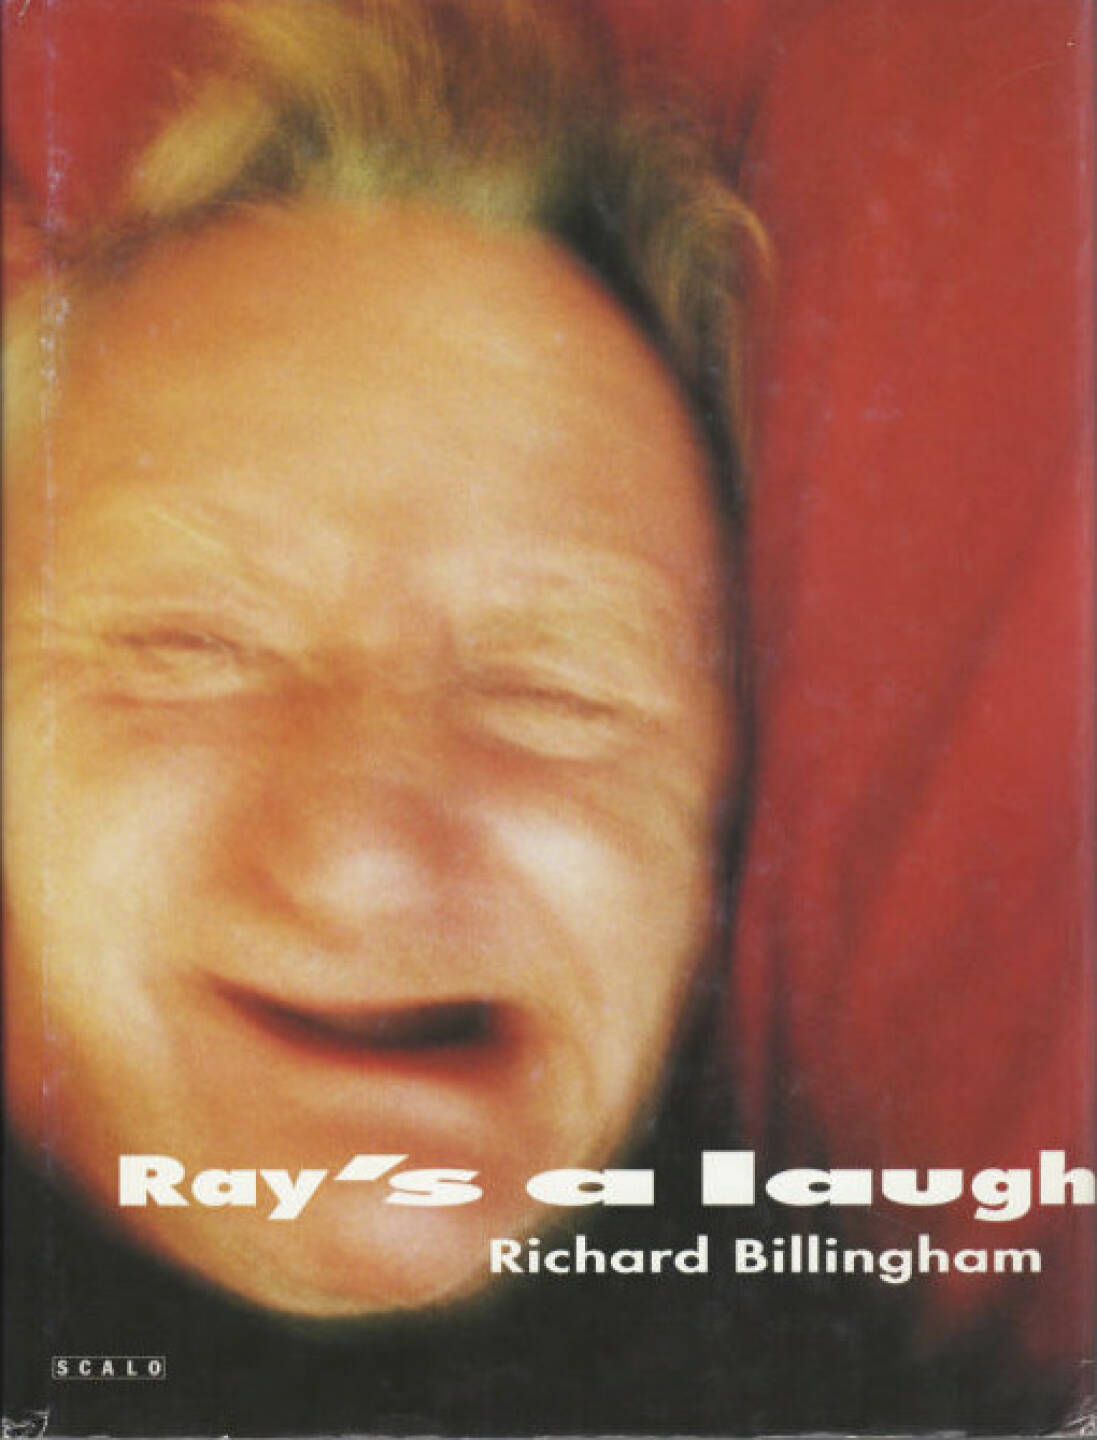 Richard Billingham - Ray's a laugh, Preis: 150-250 Euro, http://josefchladek.com/book/richard_billingham_-_rays_a_laugh